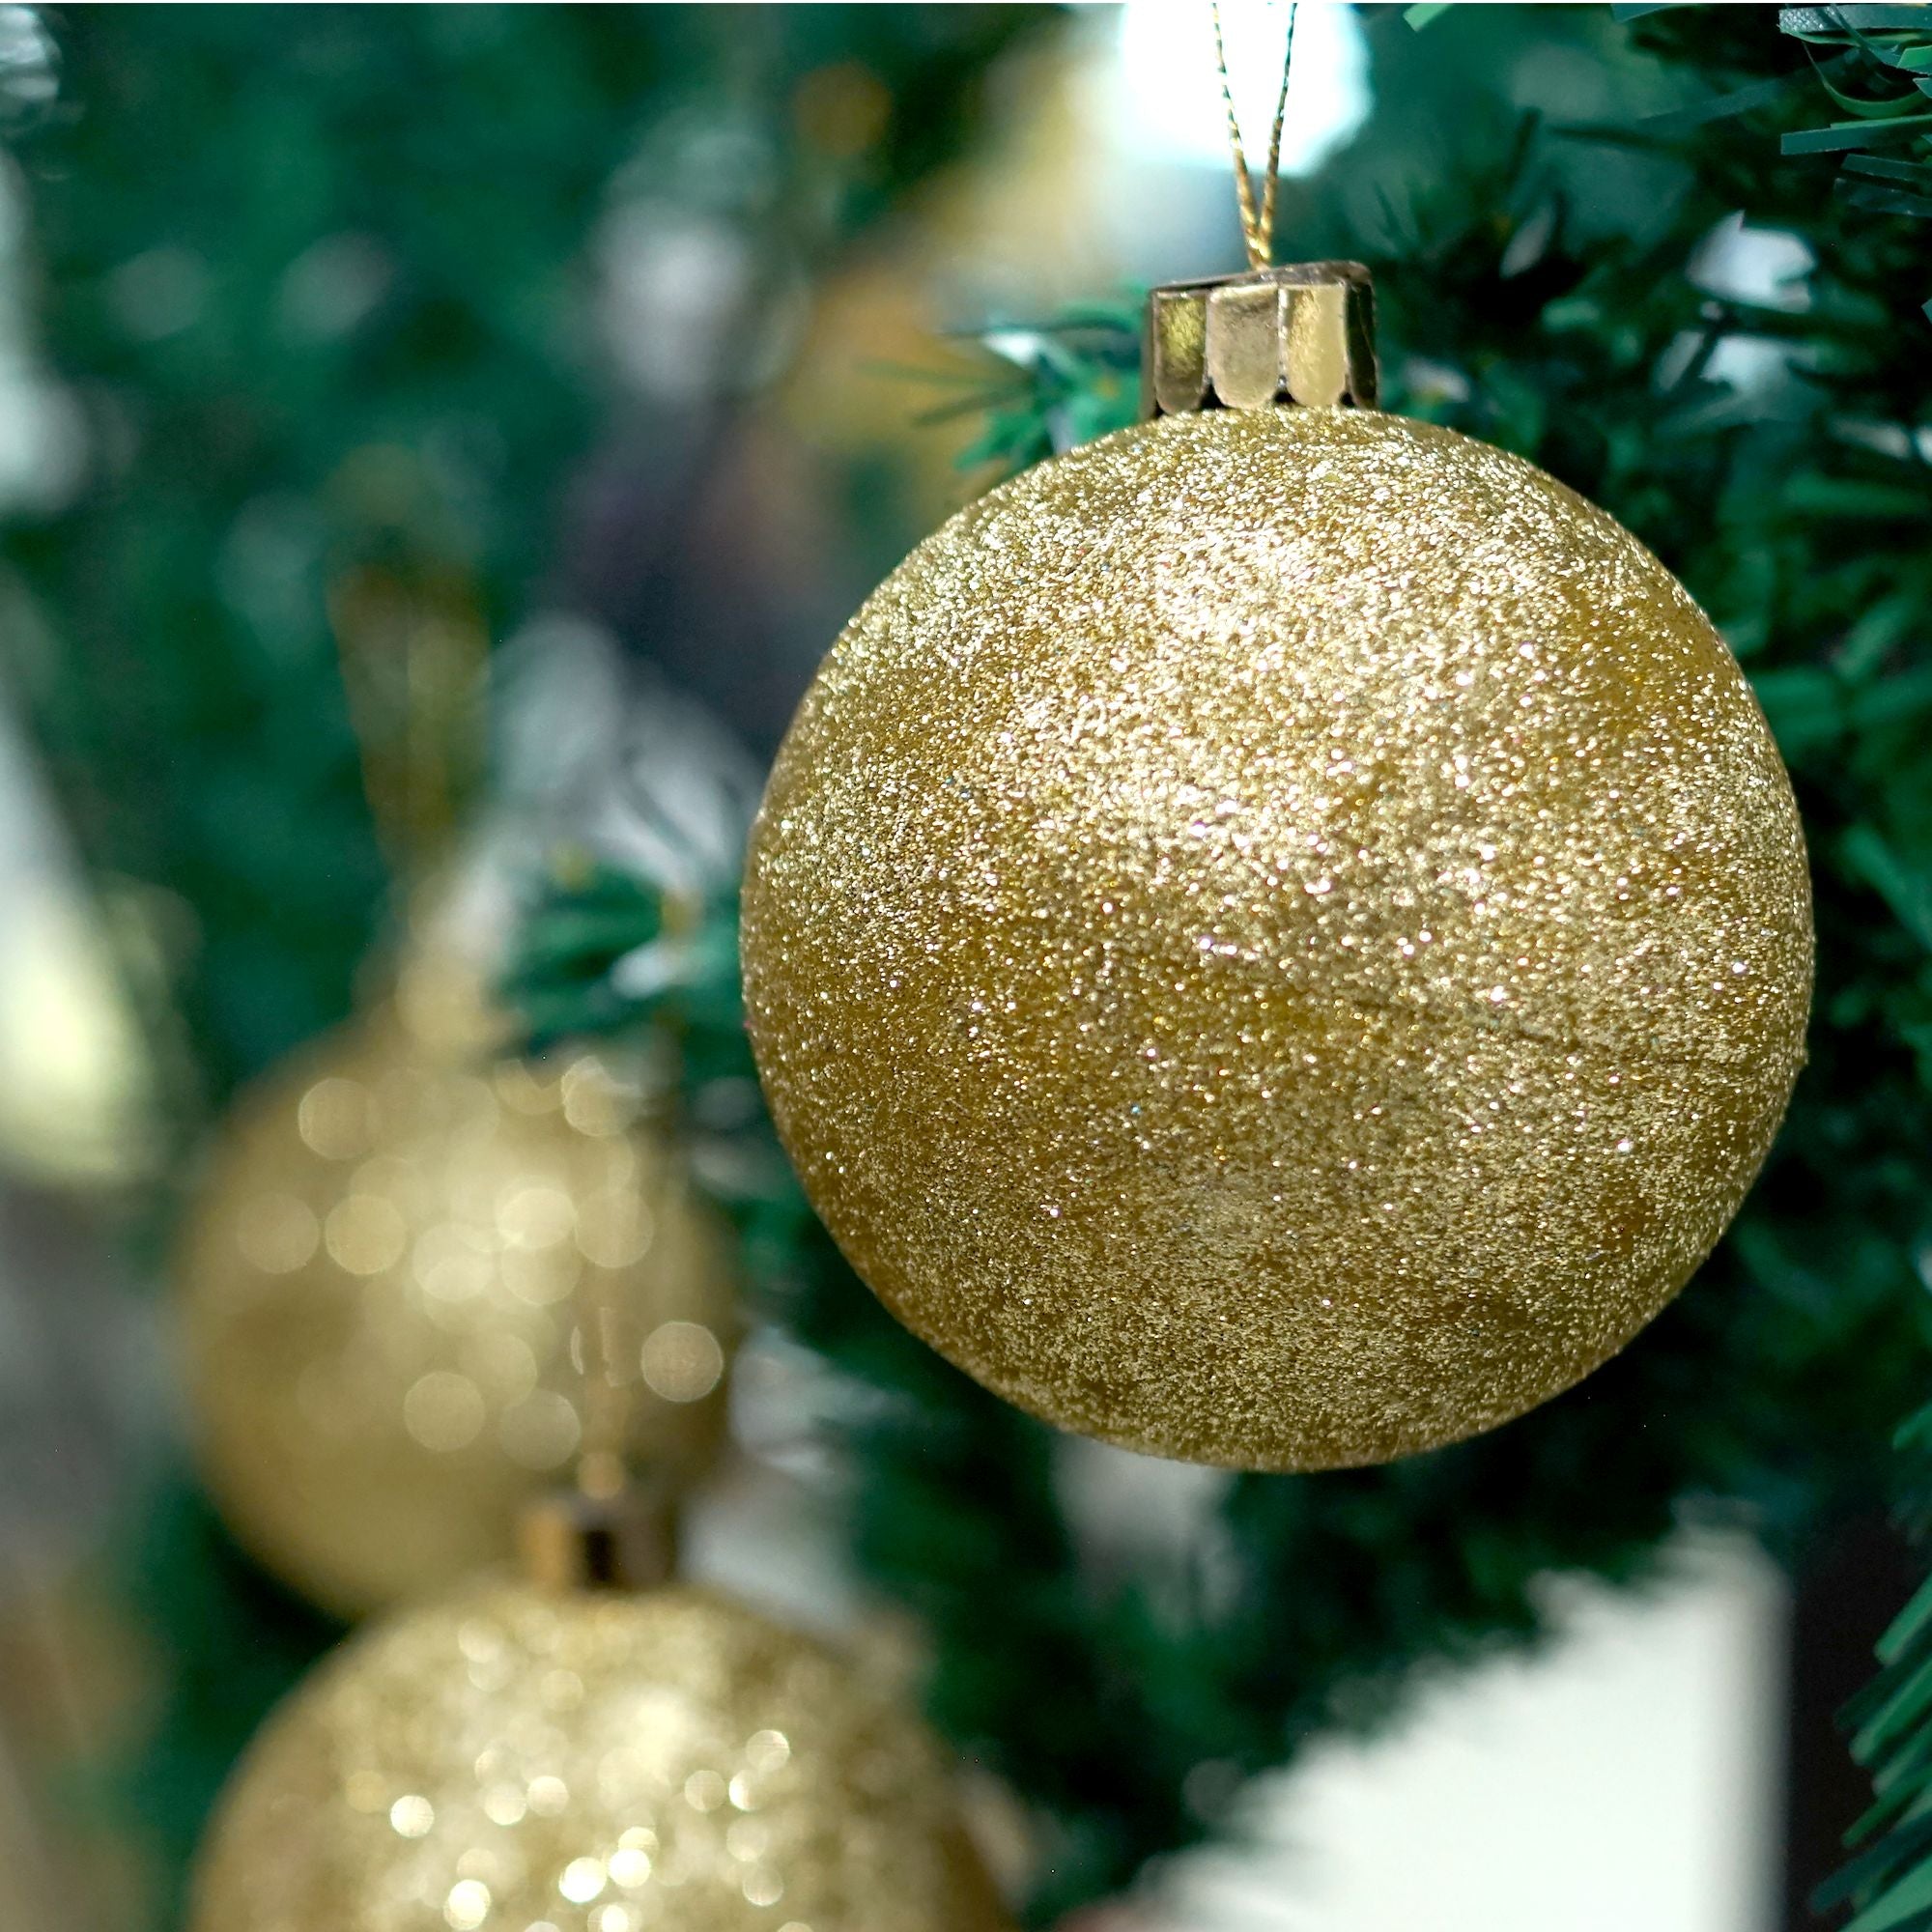 Handmade Christmas Ornaments - Glitter Baubles, 60mm, Gold, 6pc